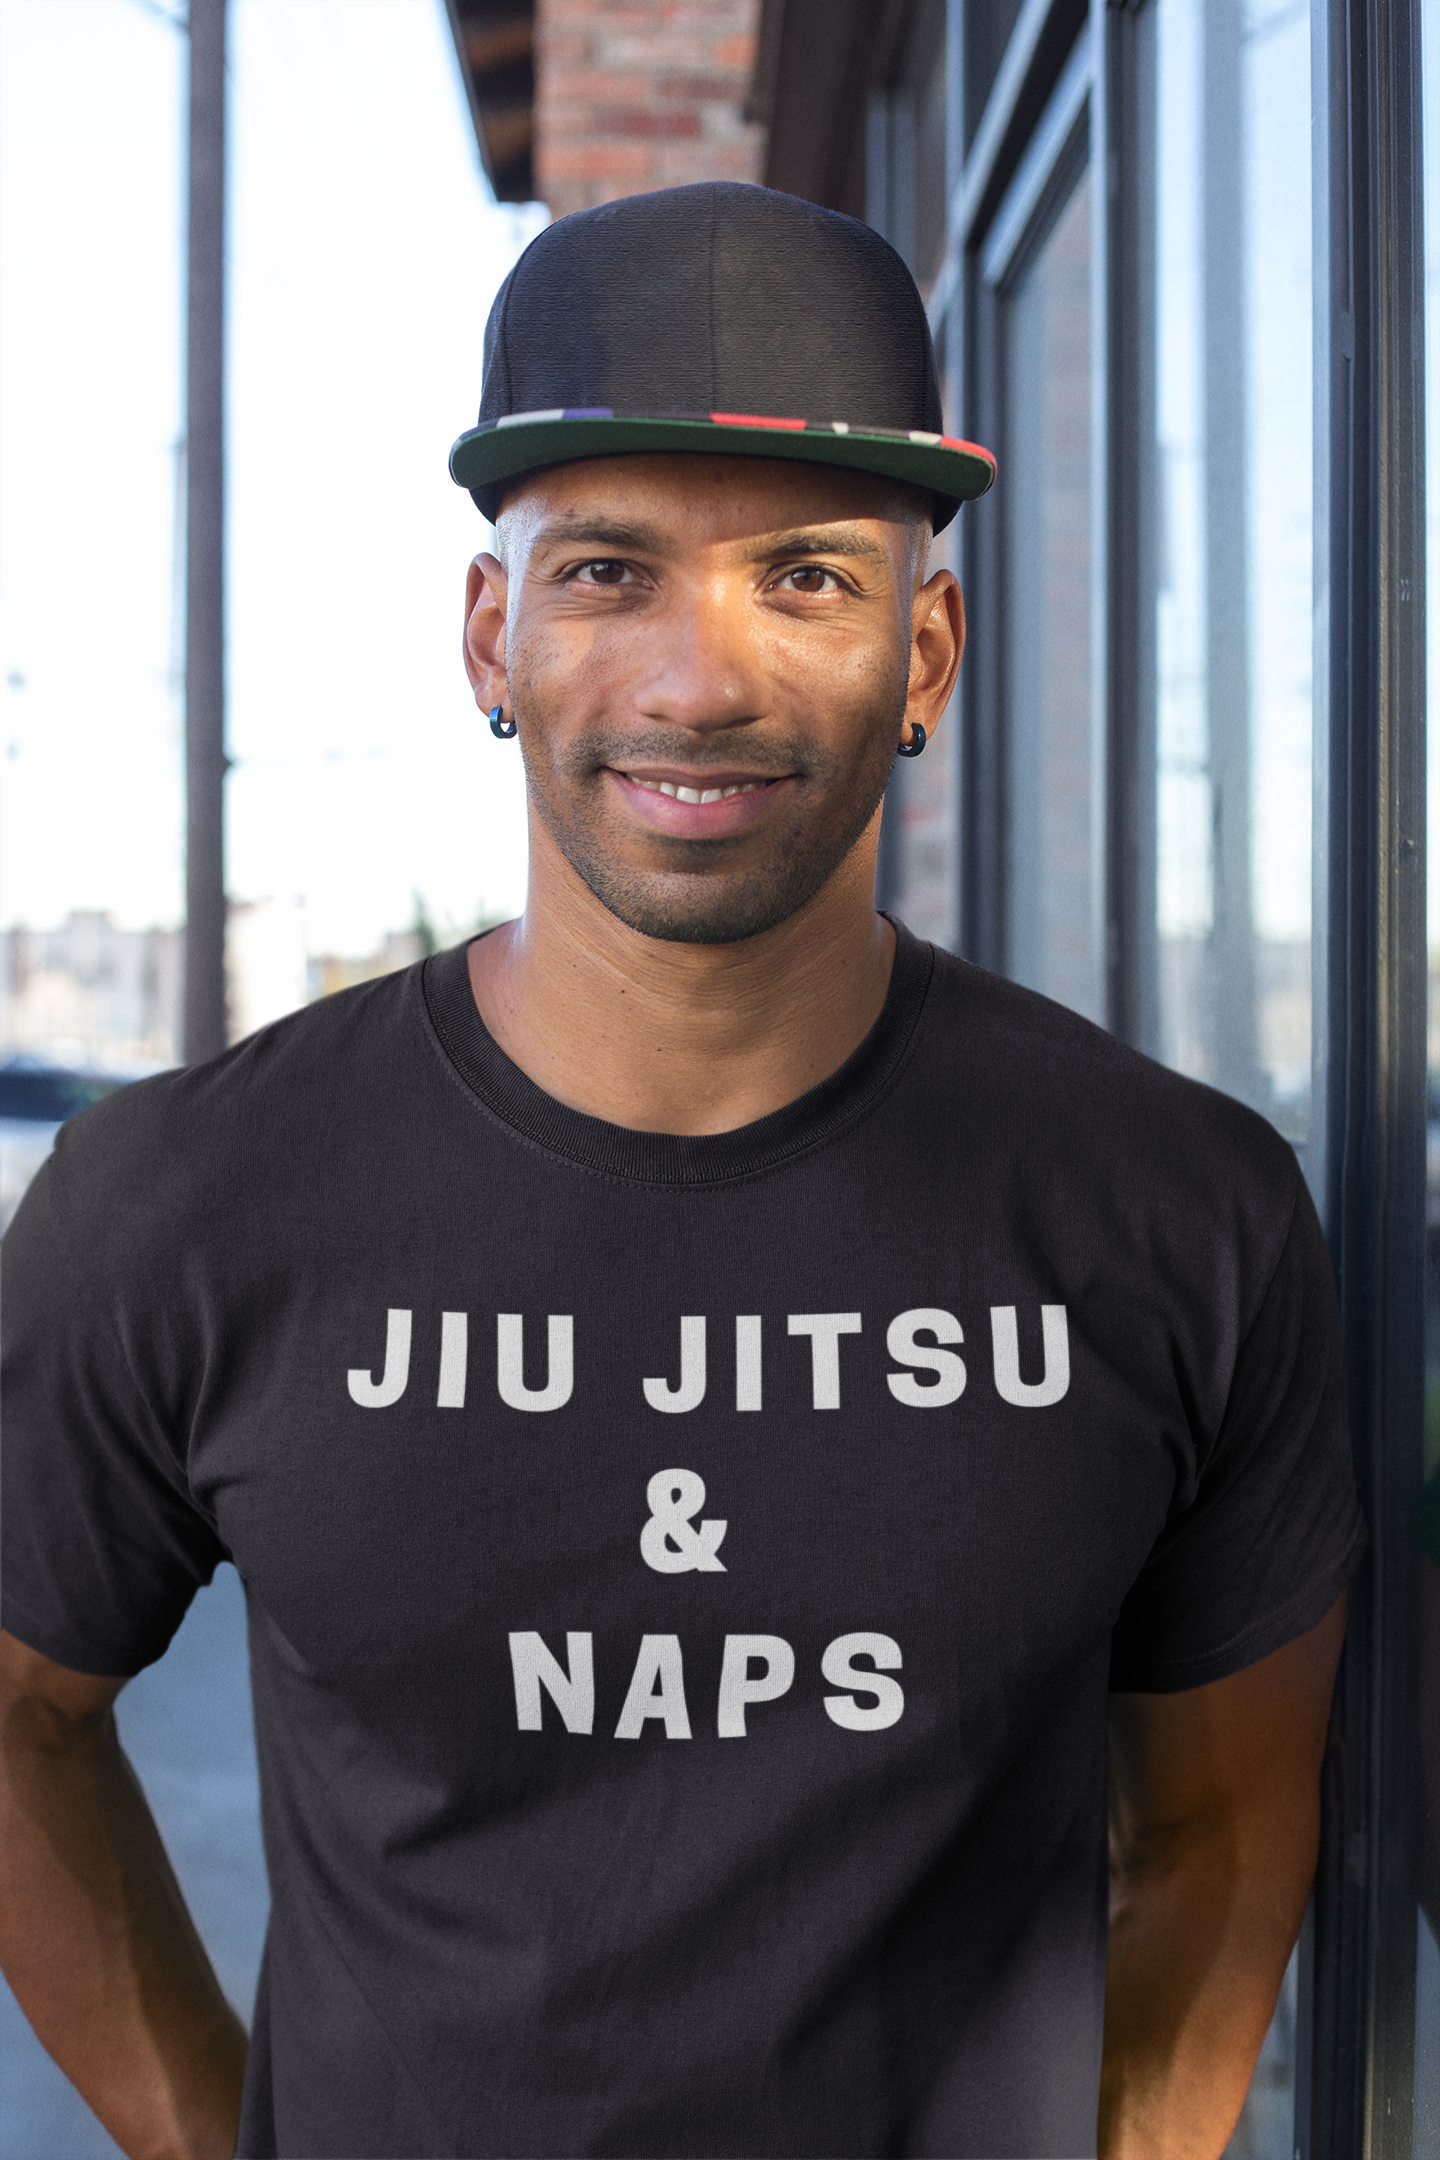 Jiu jitsu lifestyle t-shirt